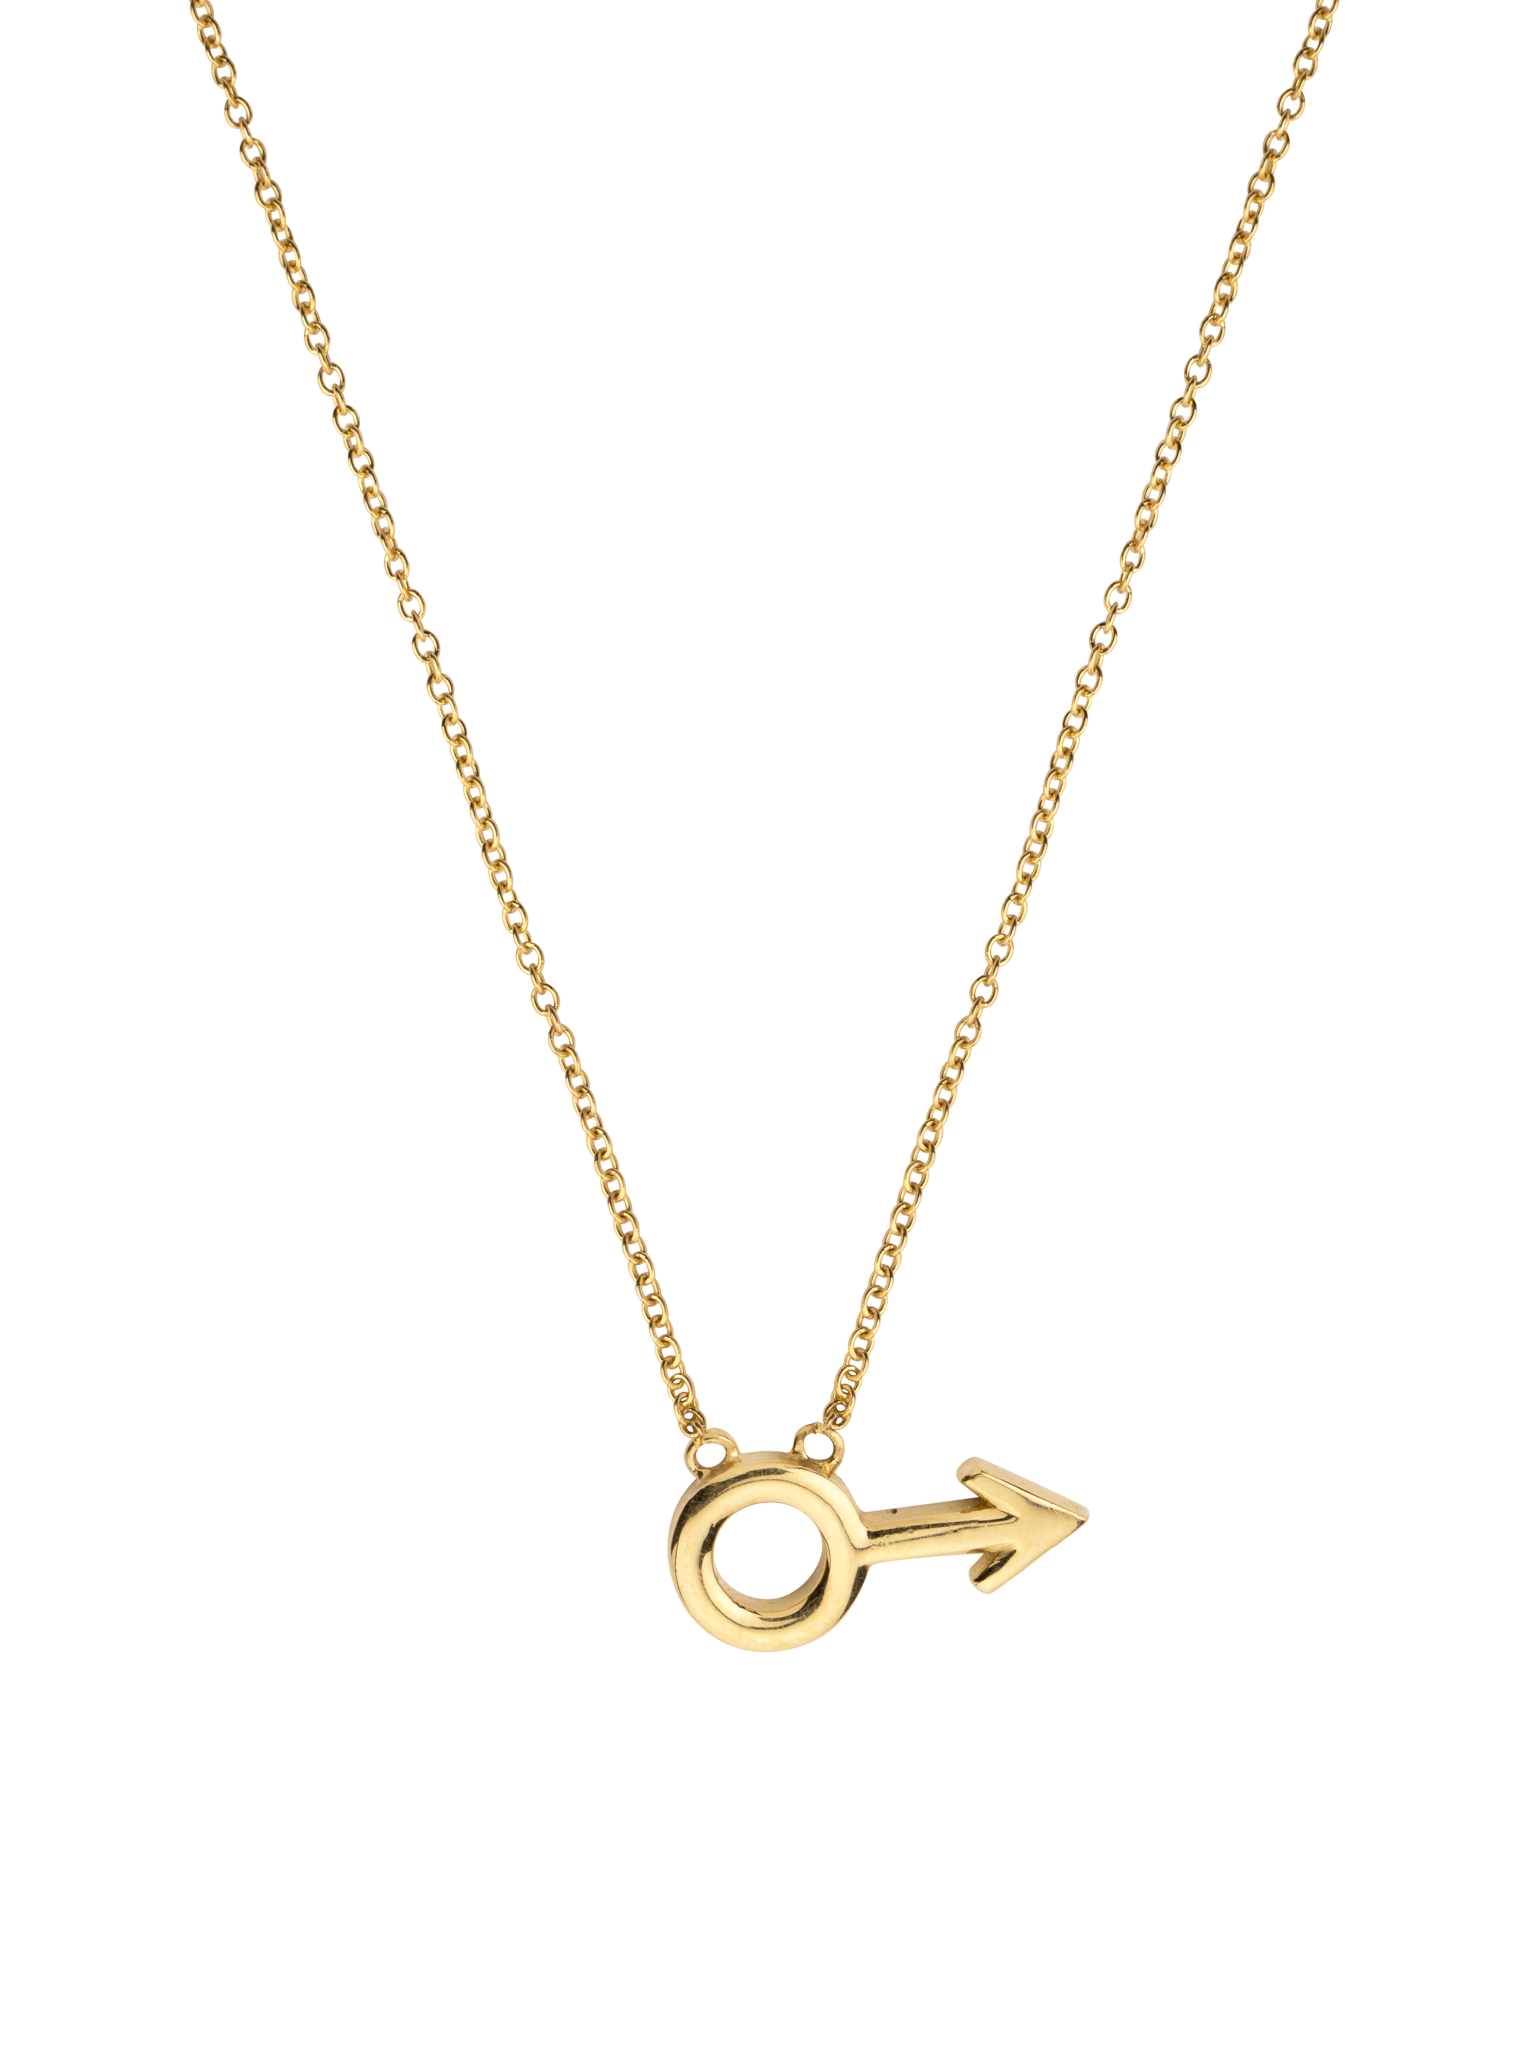 Male mars symbol necklace